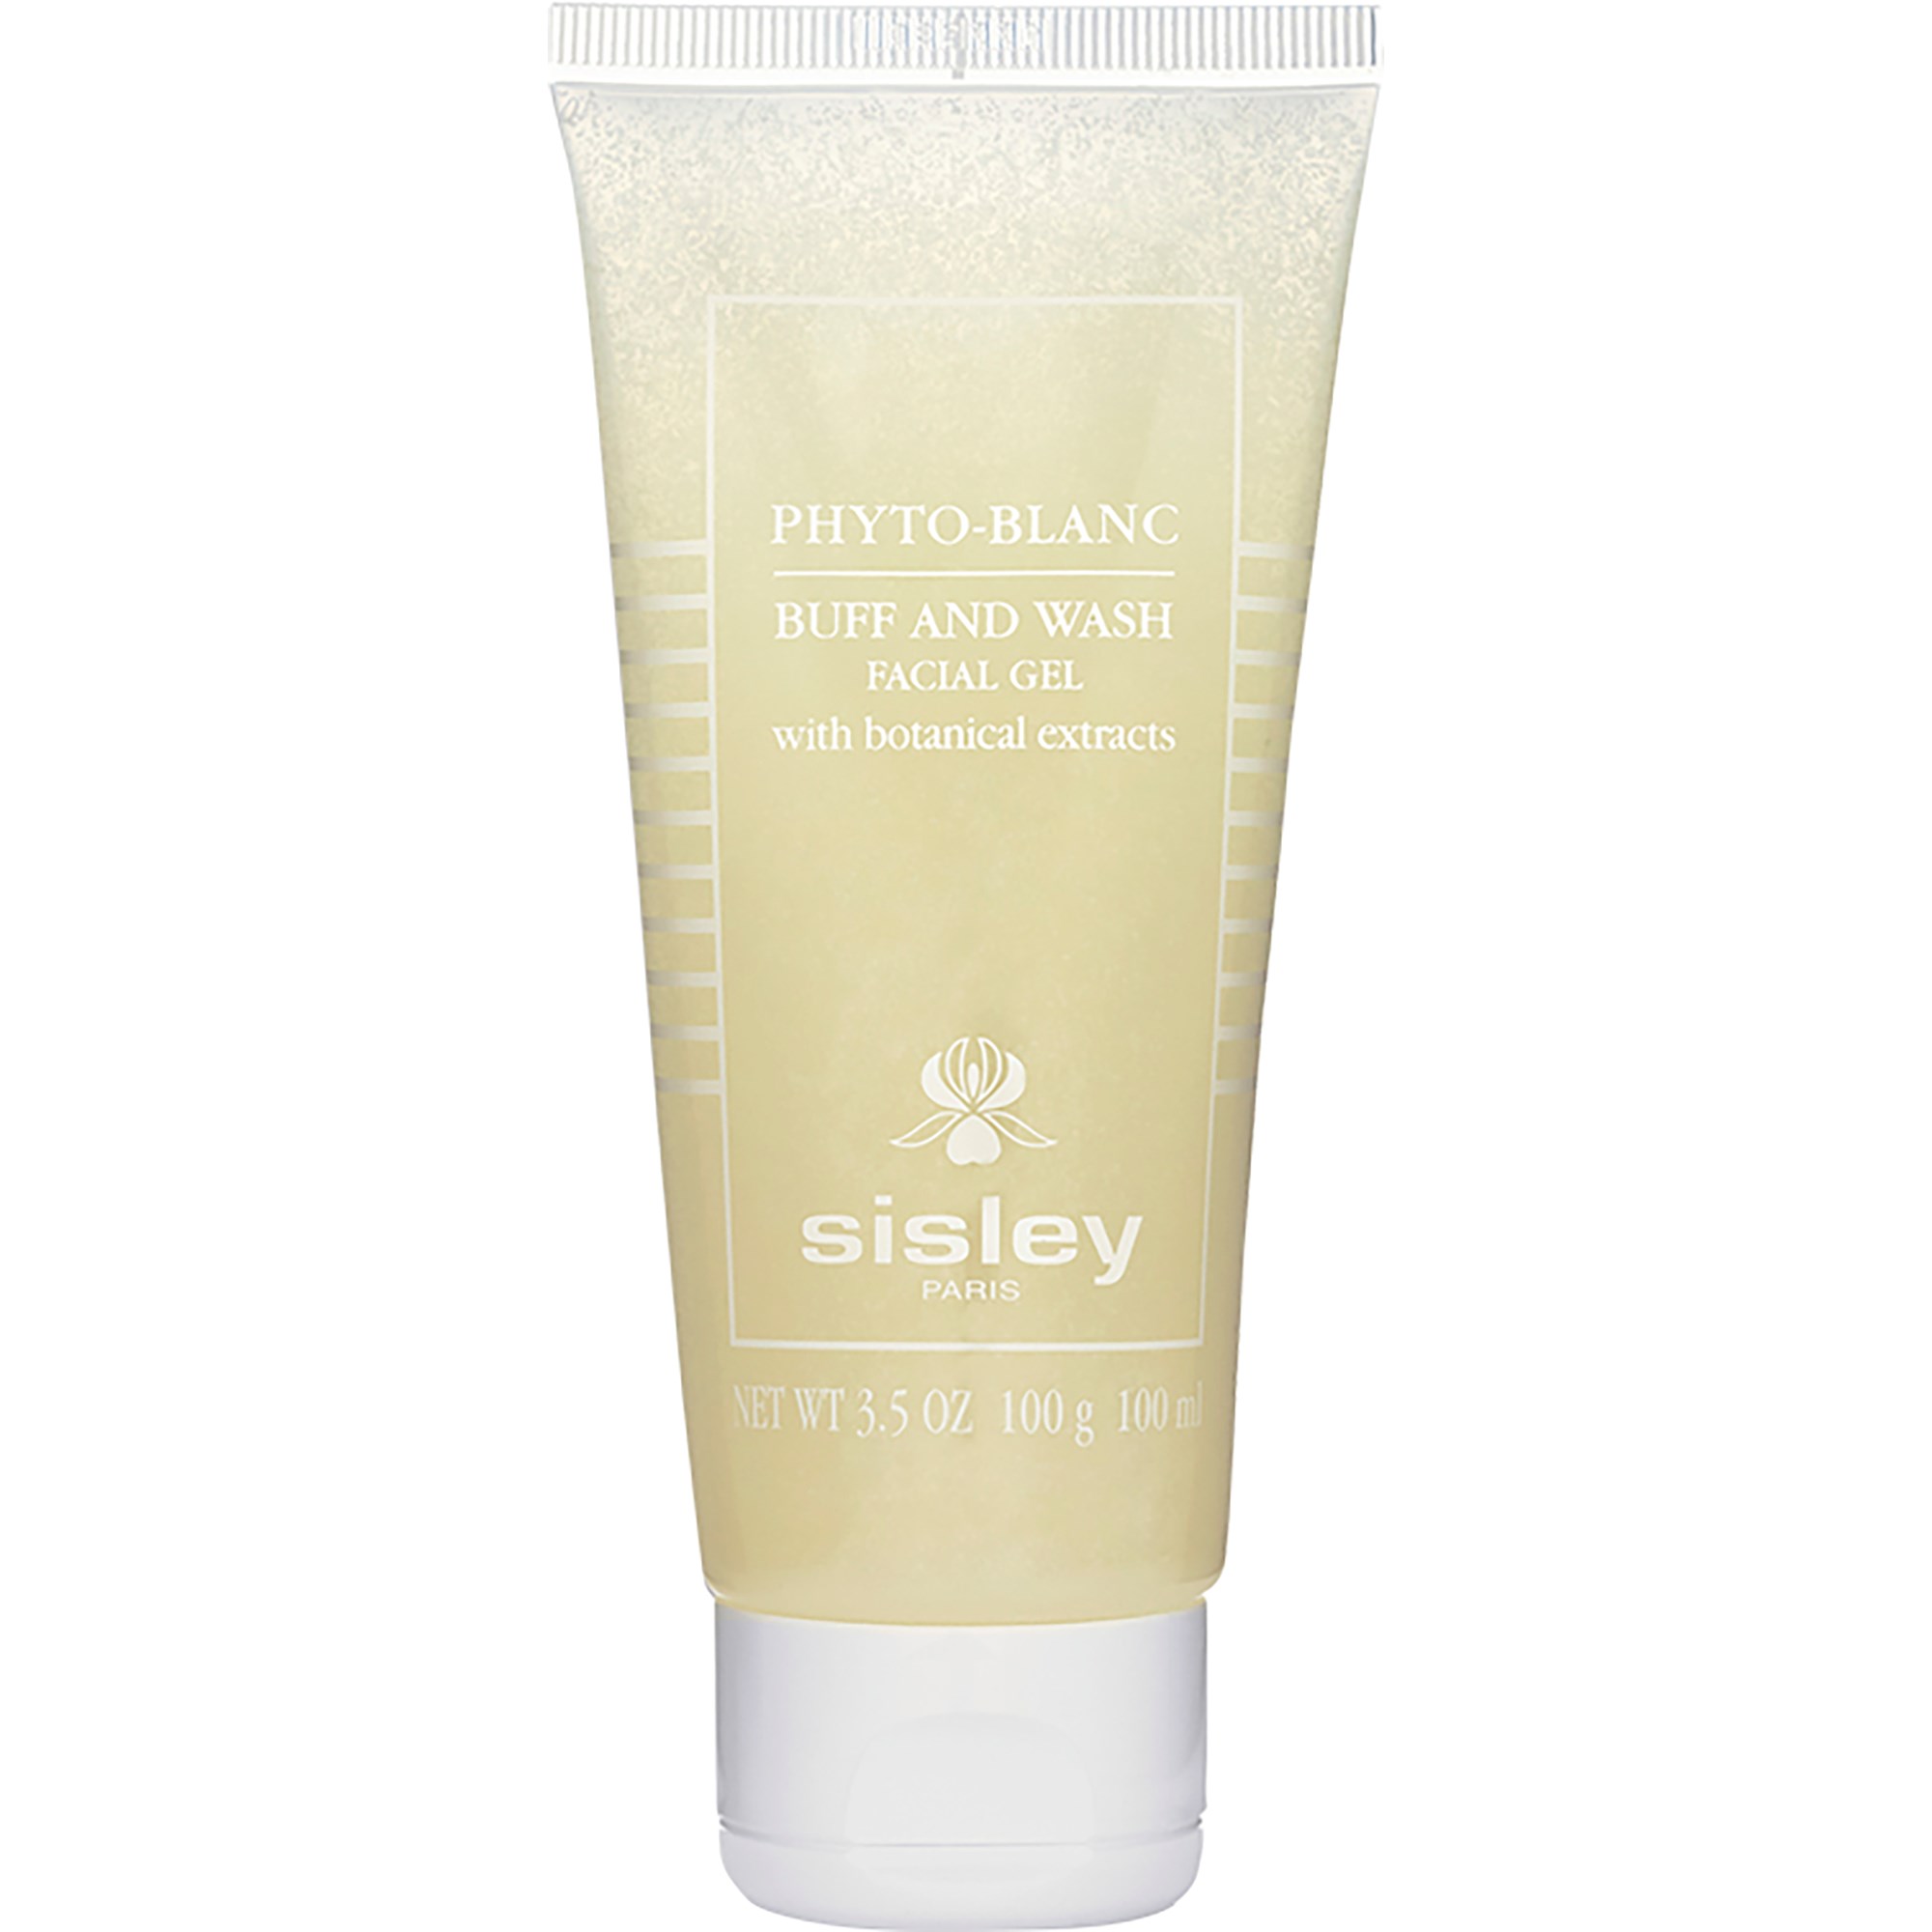 Sisley Phyto-Blanc Buff and Wash Facial Gel 100 ml